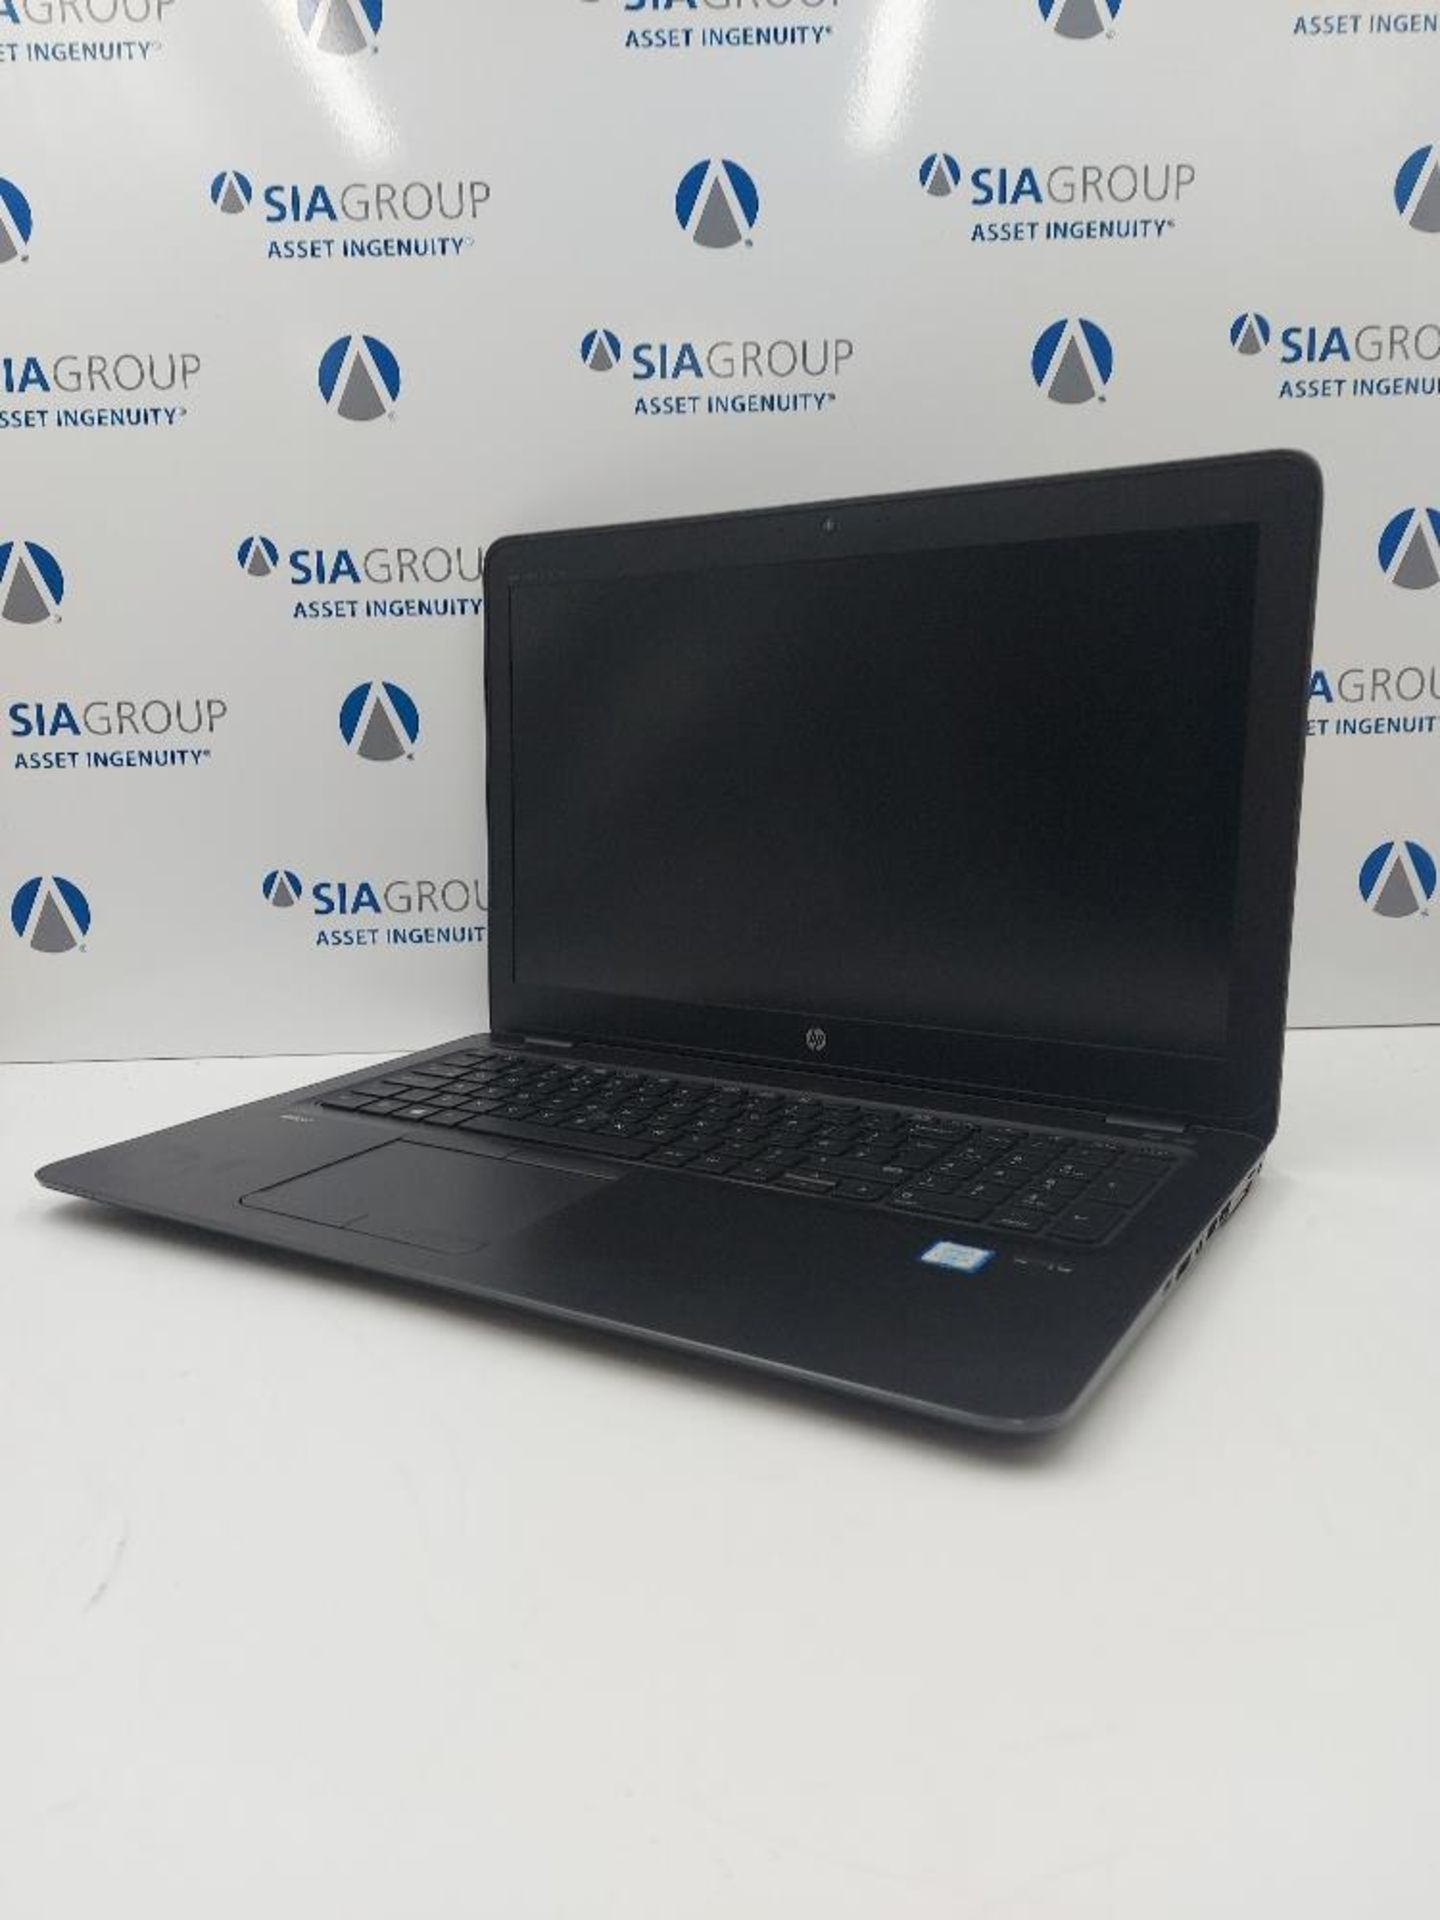 HP Zbook 15u G3 Laptop with Flight Case - Image 2 of 8